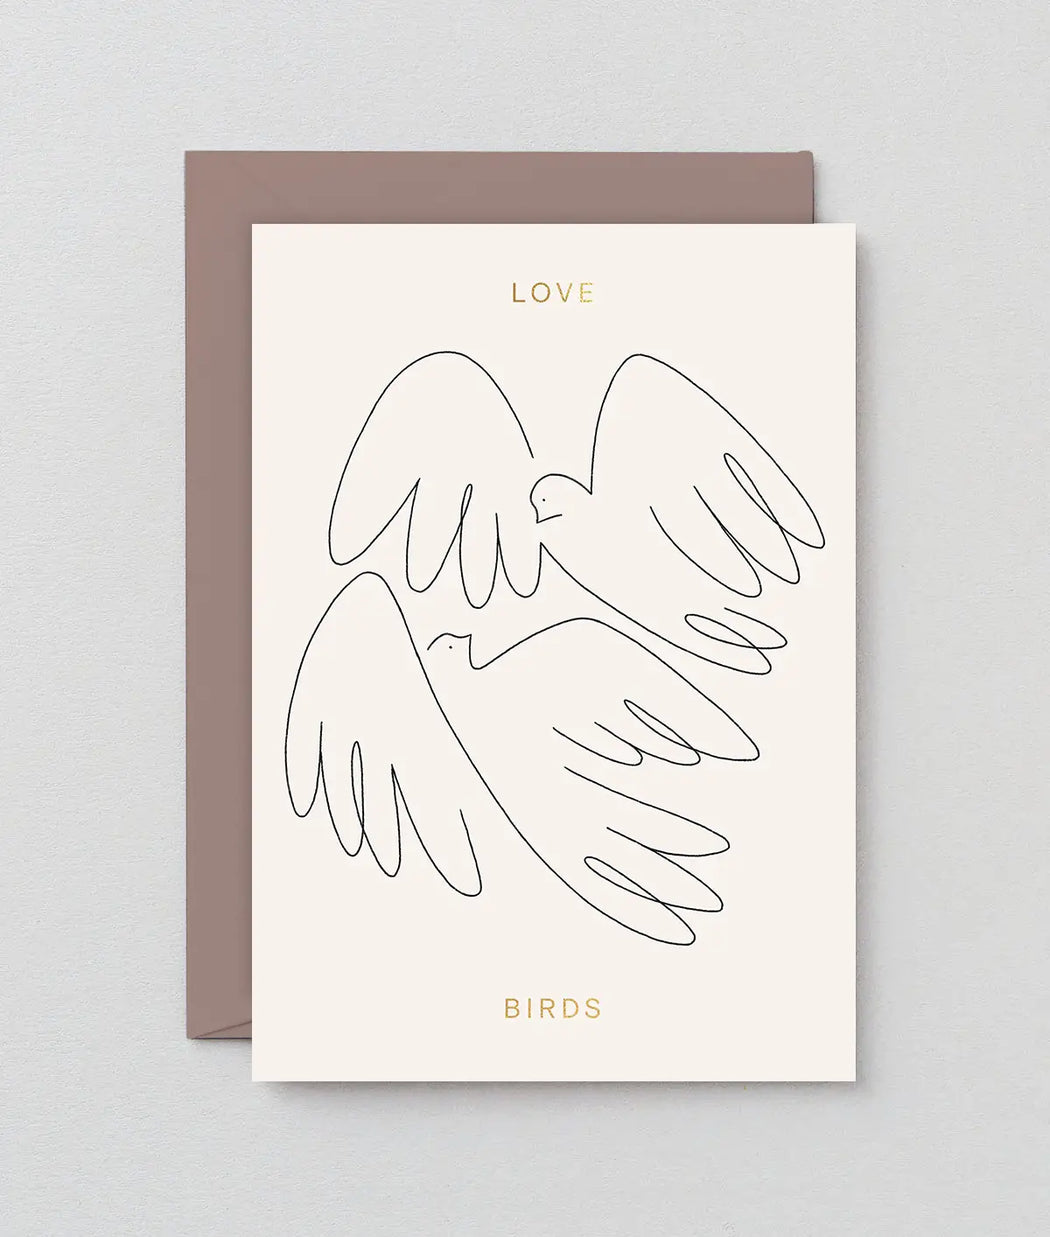 Wrap - ‘Love Birds’ Greetings Card